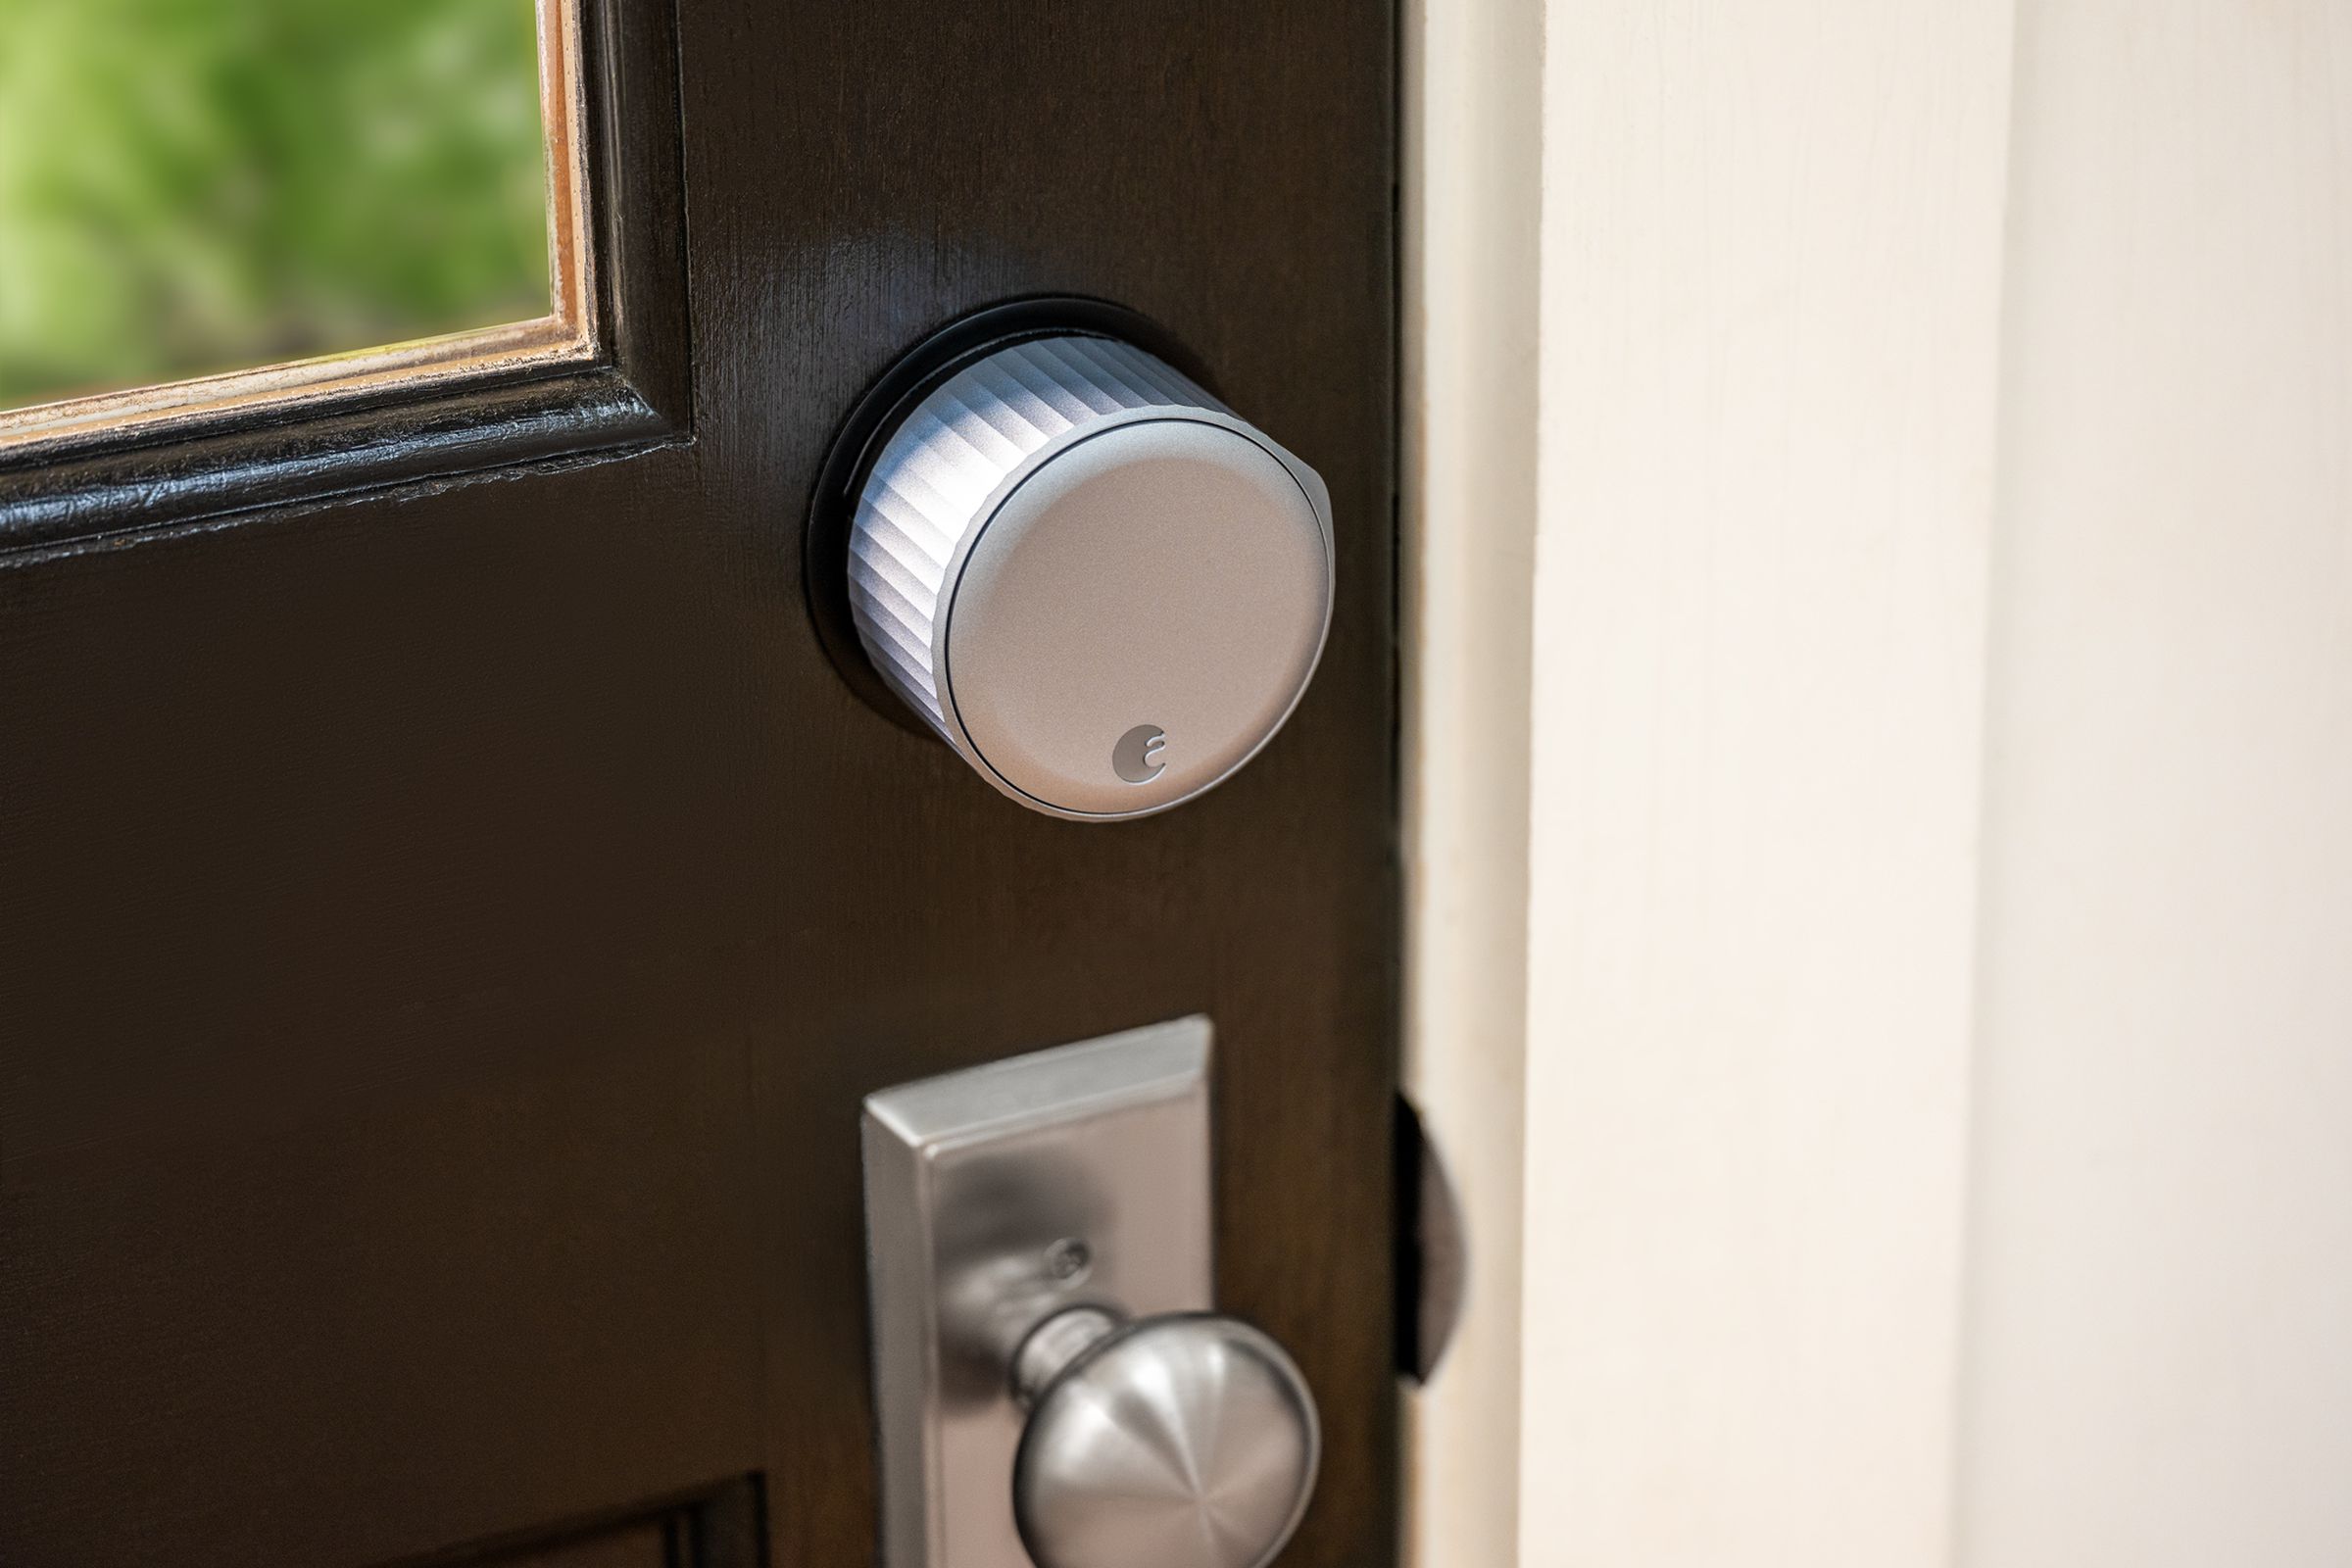 August Wi-Fi Smart Lock installed on a brown door